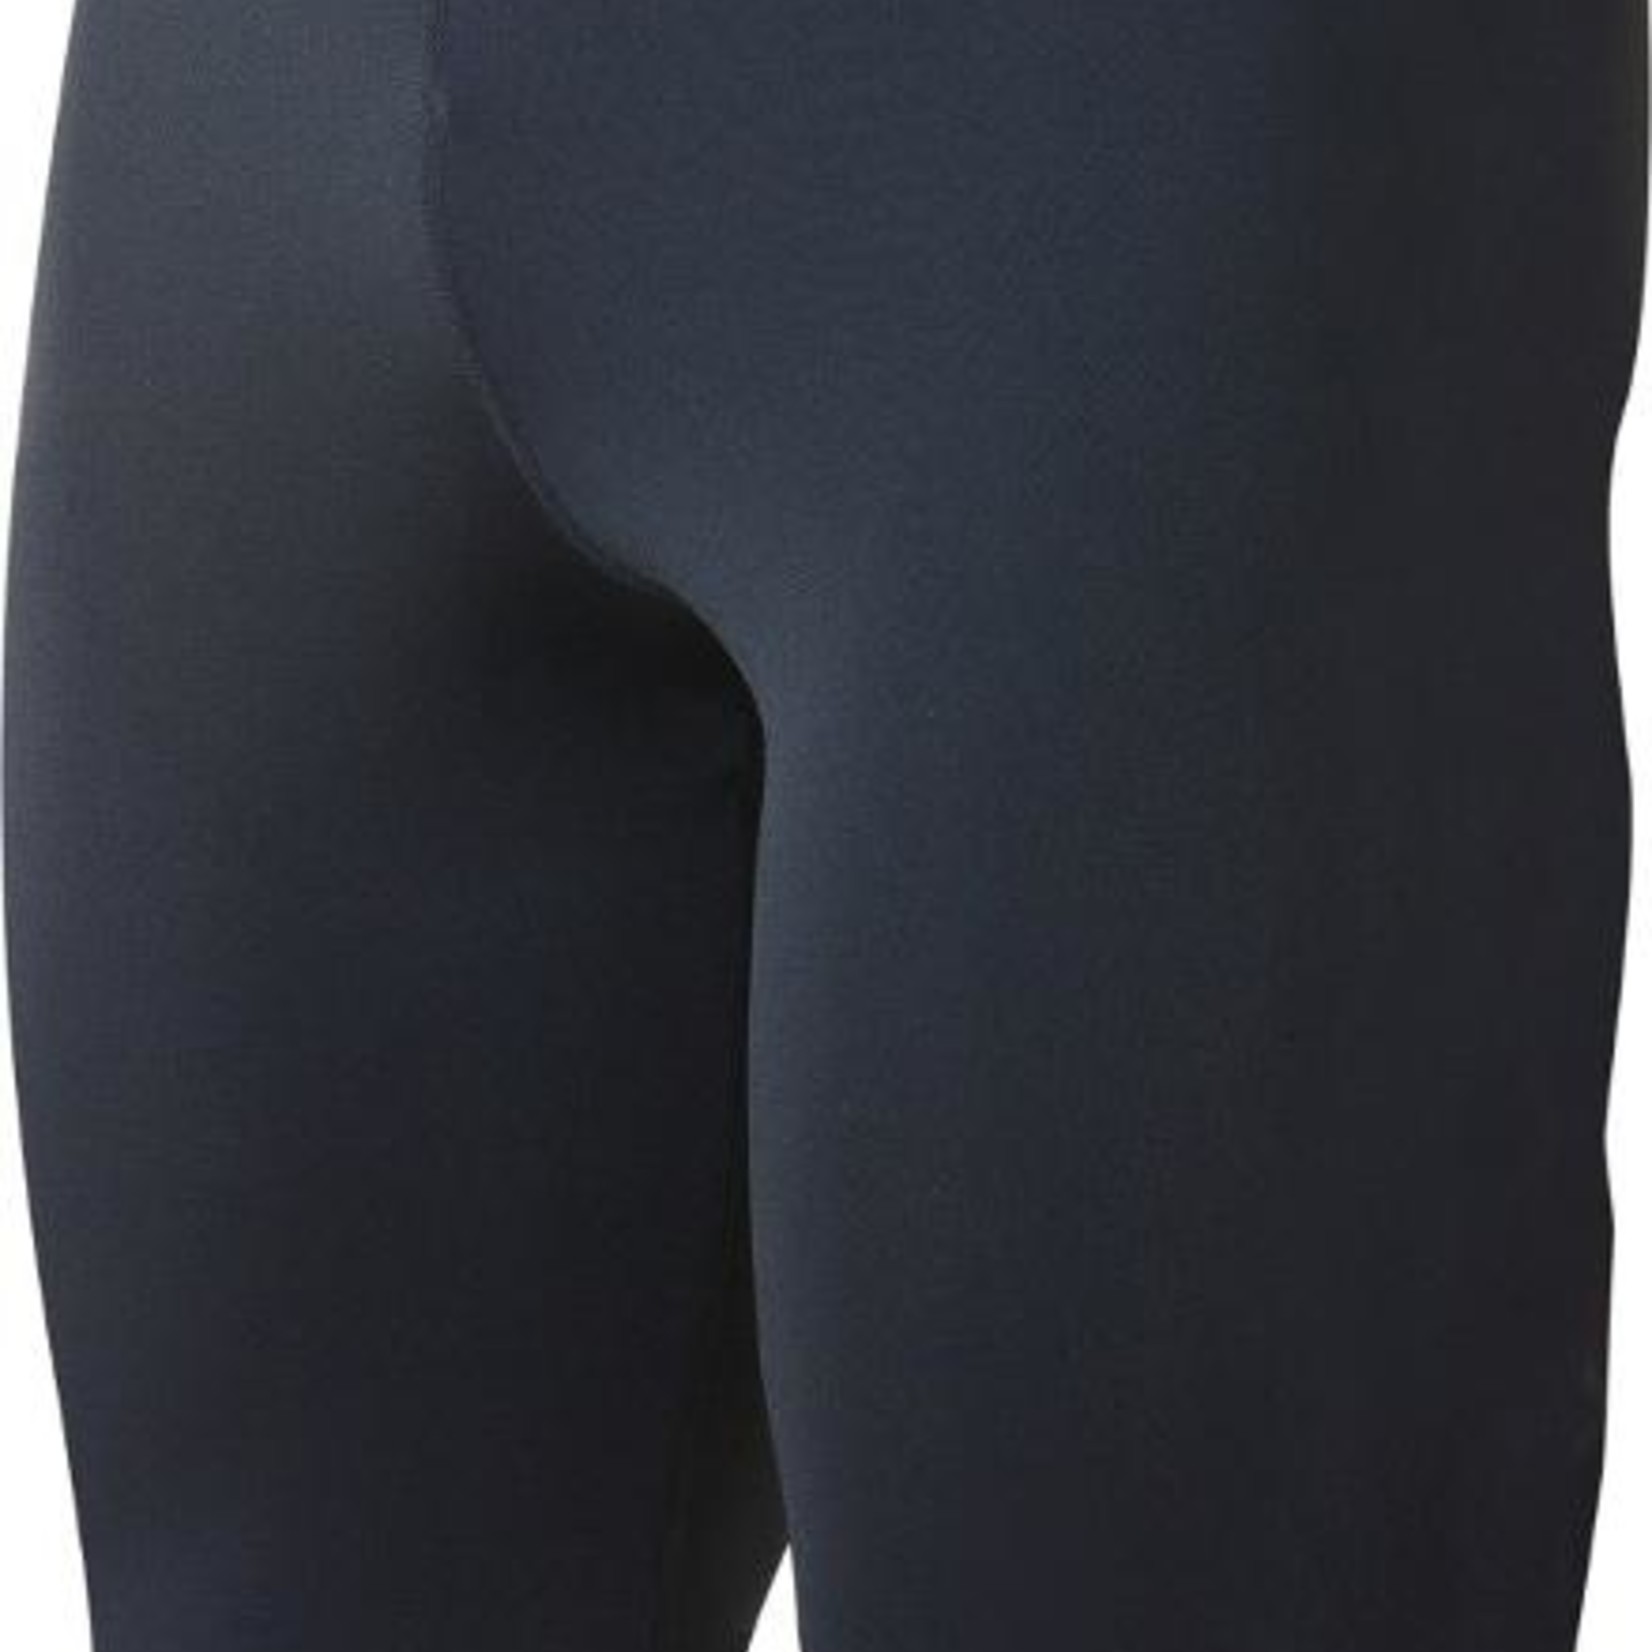 TYR TYR Solid Jammer Swim Suit - Men's Black Size 34